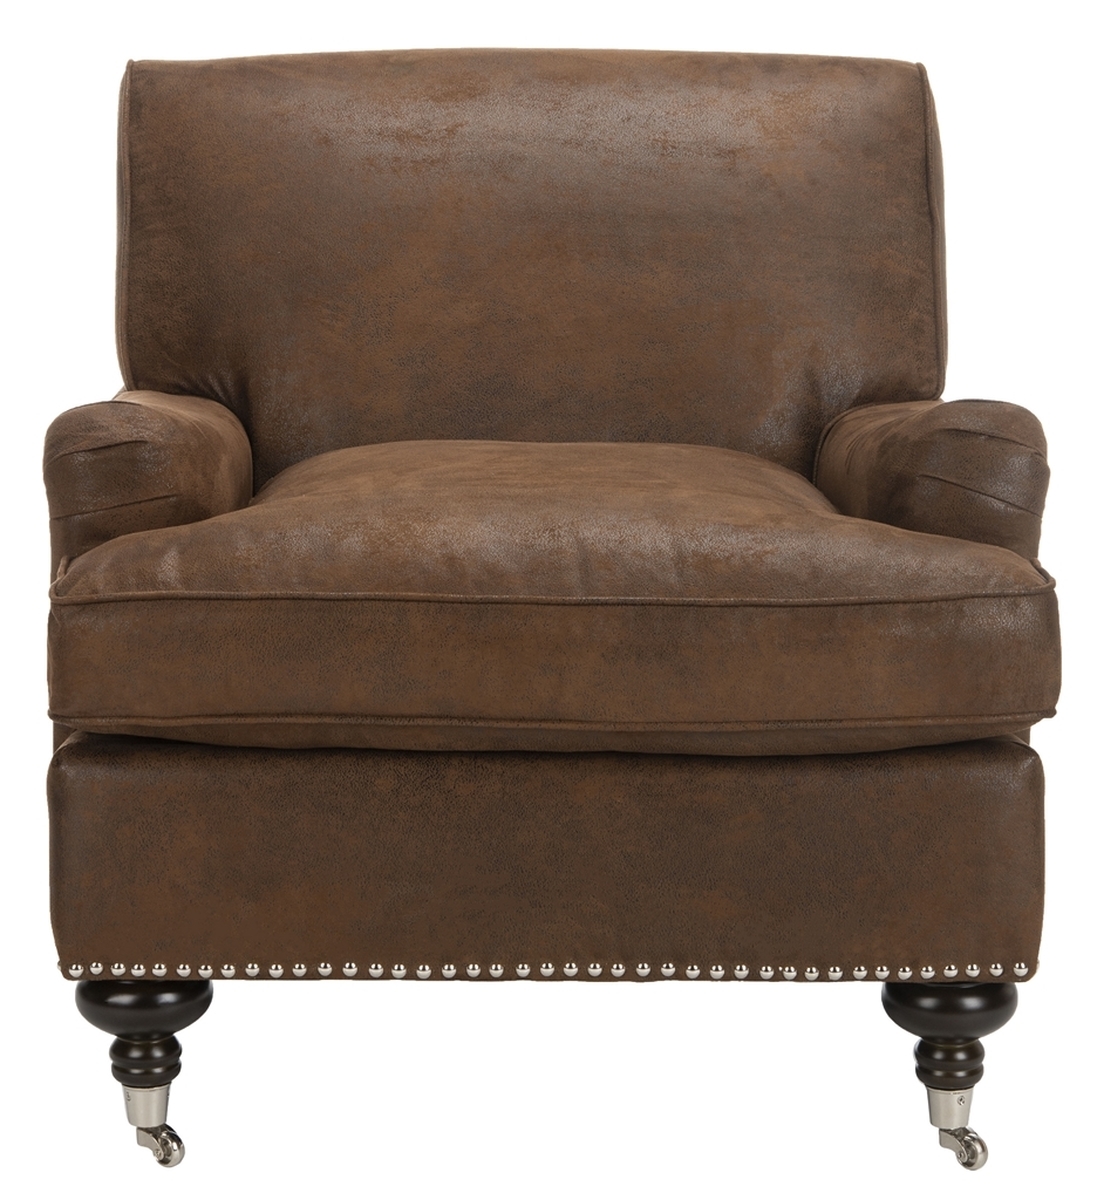 Chloe Club Chair - Brown/Espresso - Arlo Home - Image 1